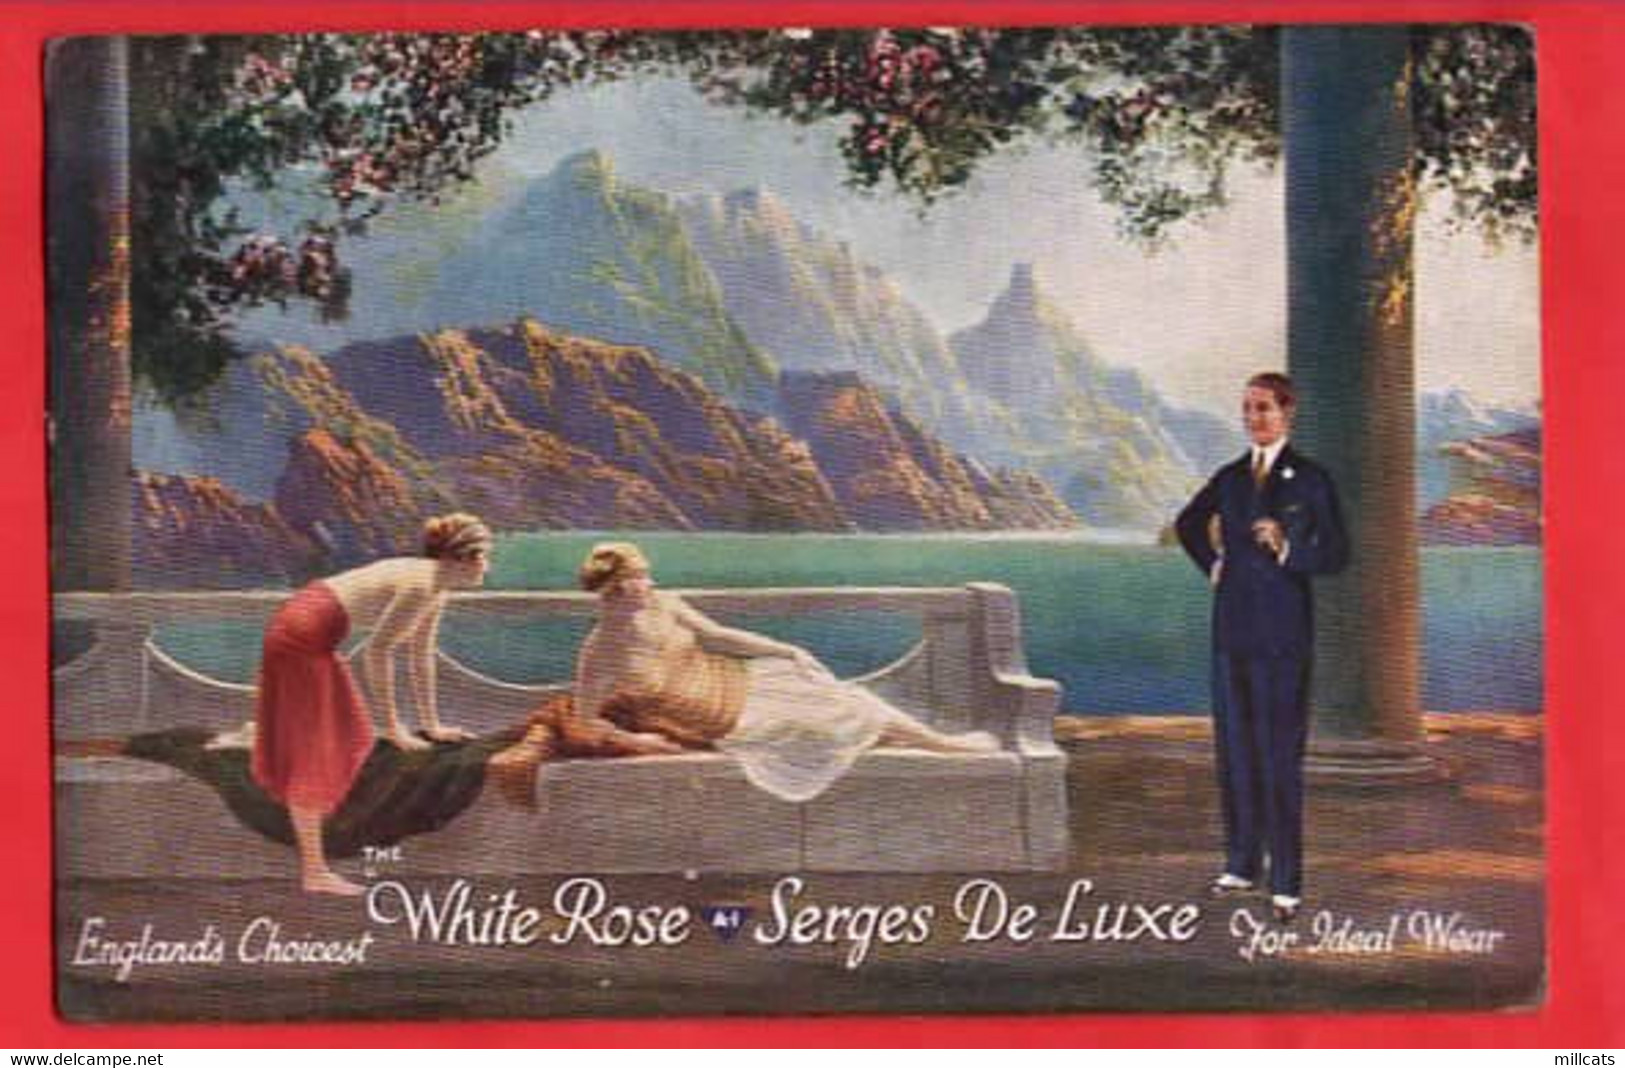 WHITE ROSE   SERGES DE LUXE  FOR IDEAL WEAR   ENGLAND'S CHOICEST     FASHION INTEREST - Pubblicitari